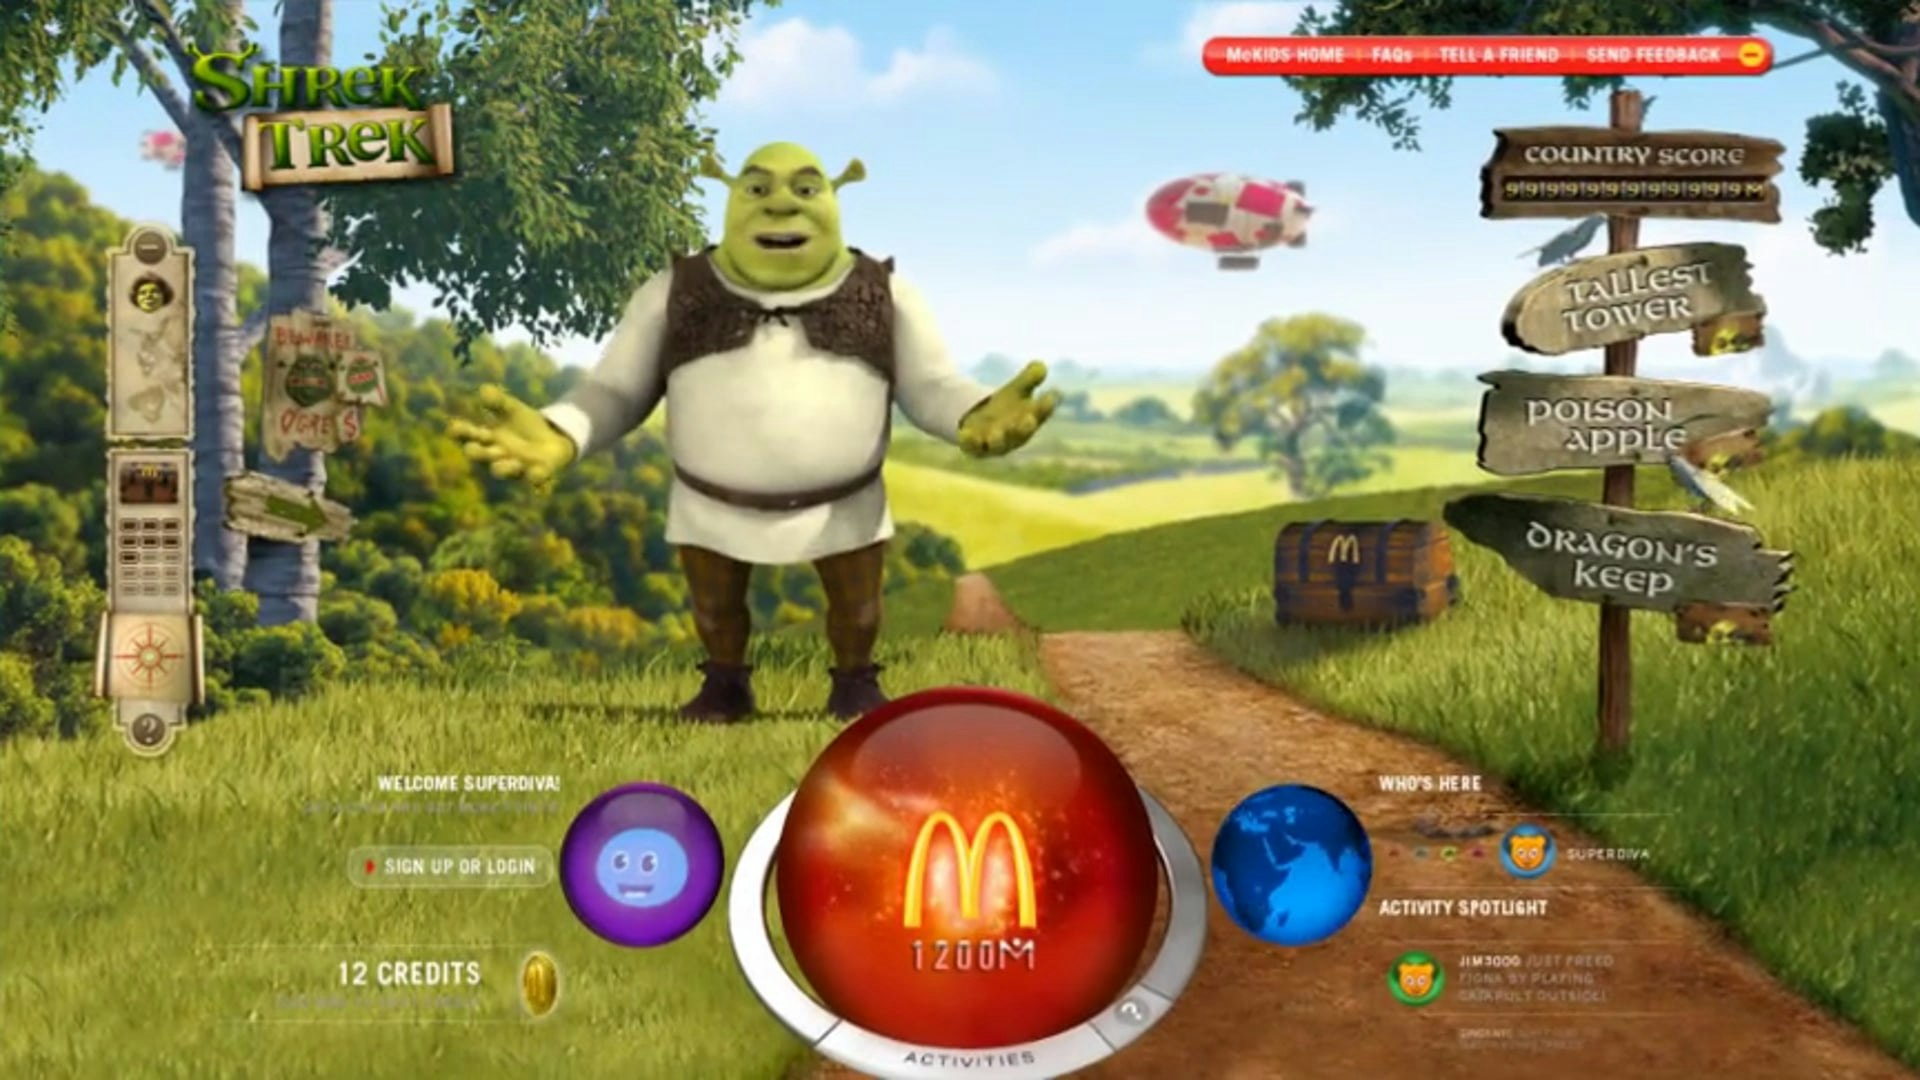 McDonald's - Shrek's Treketh to Adventure